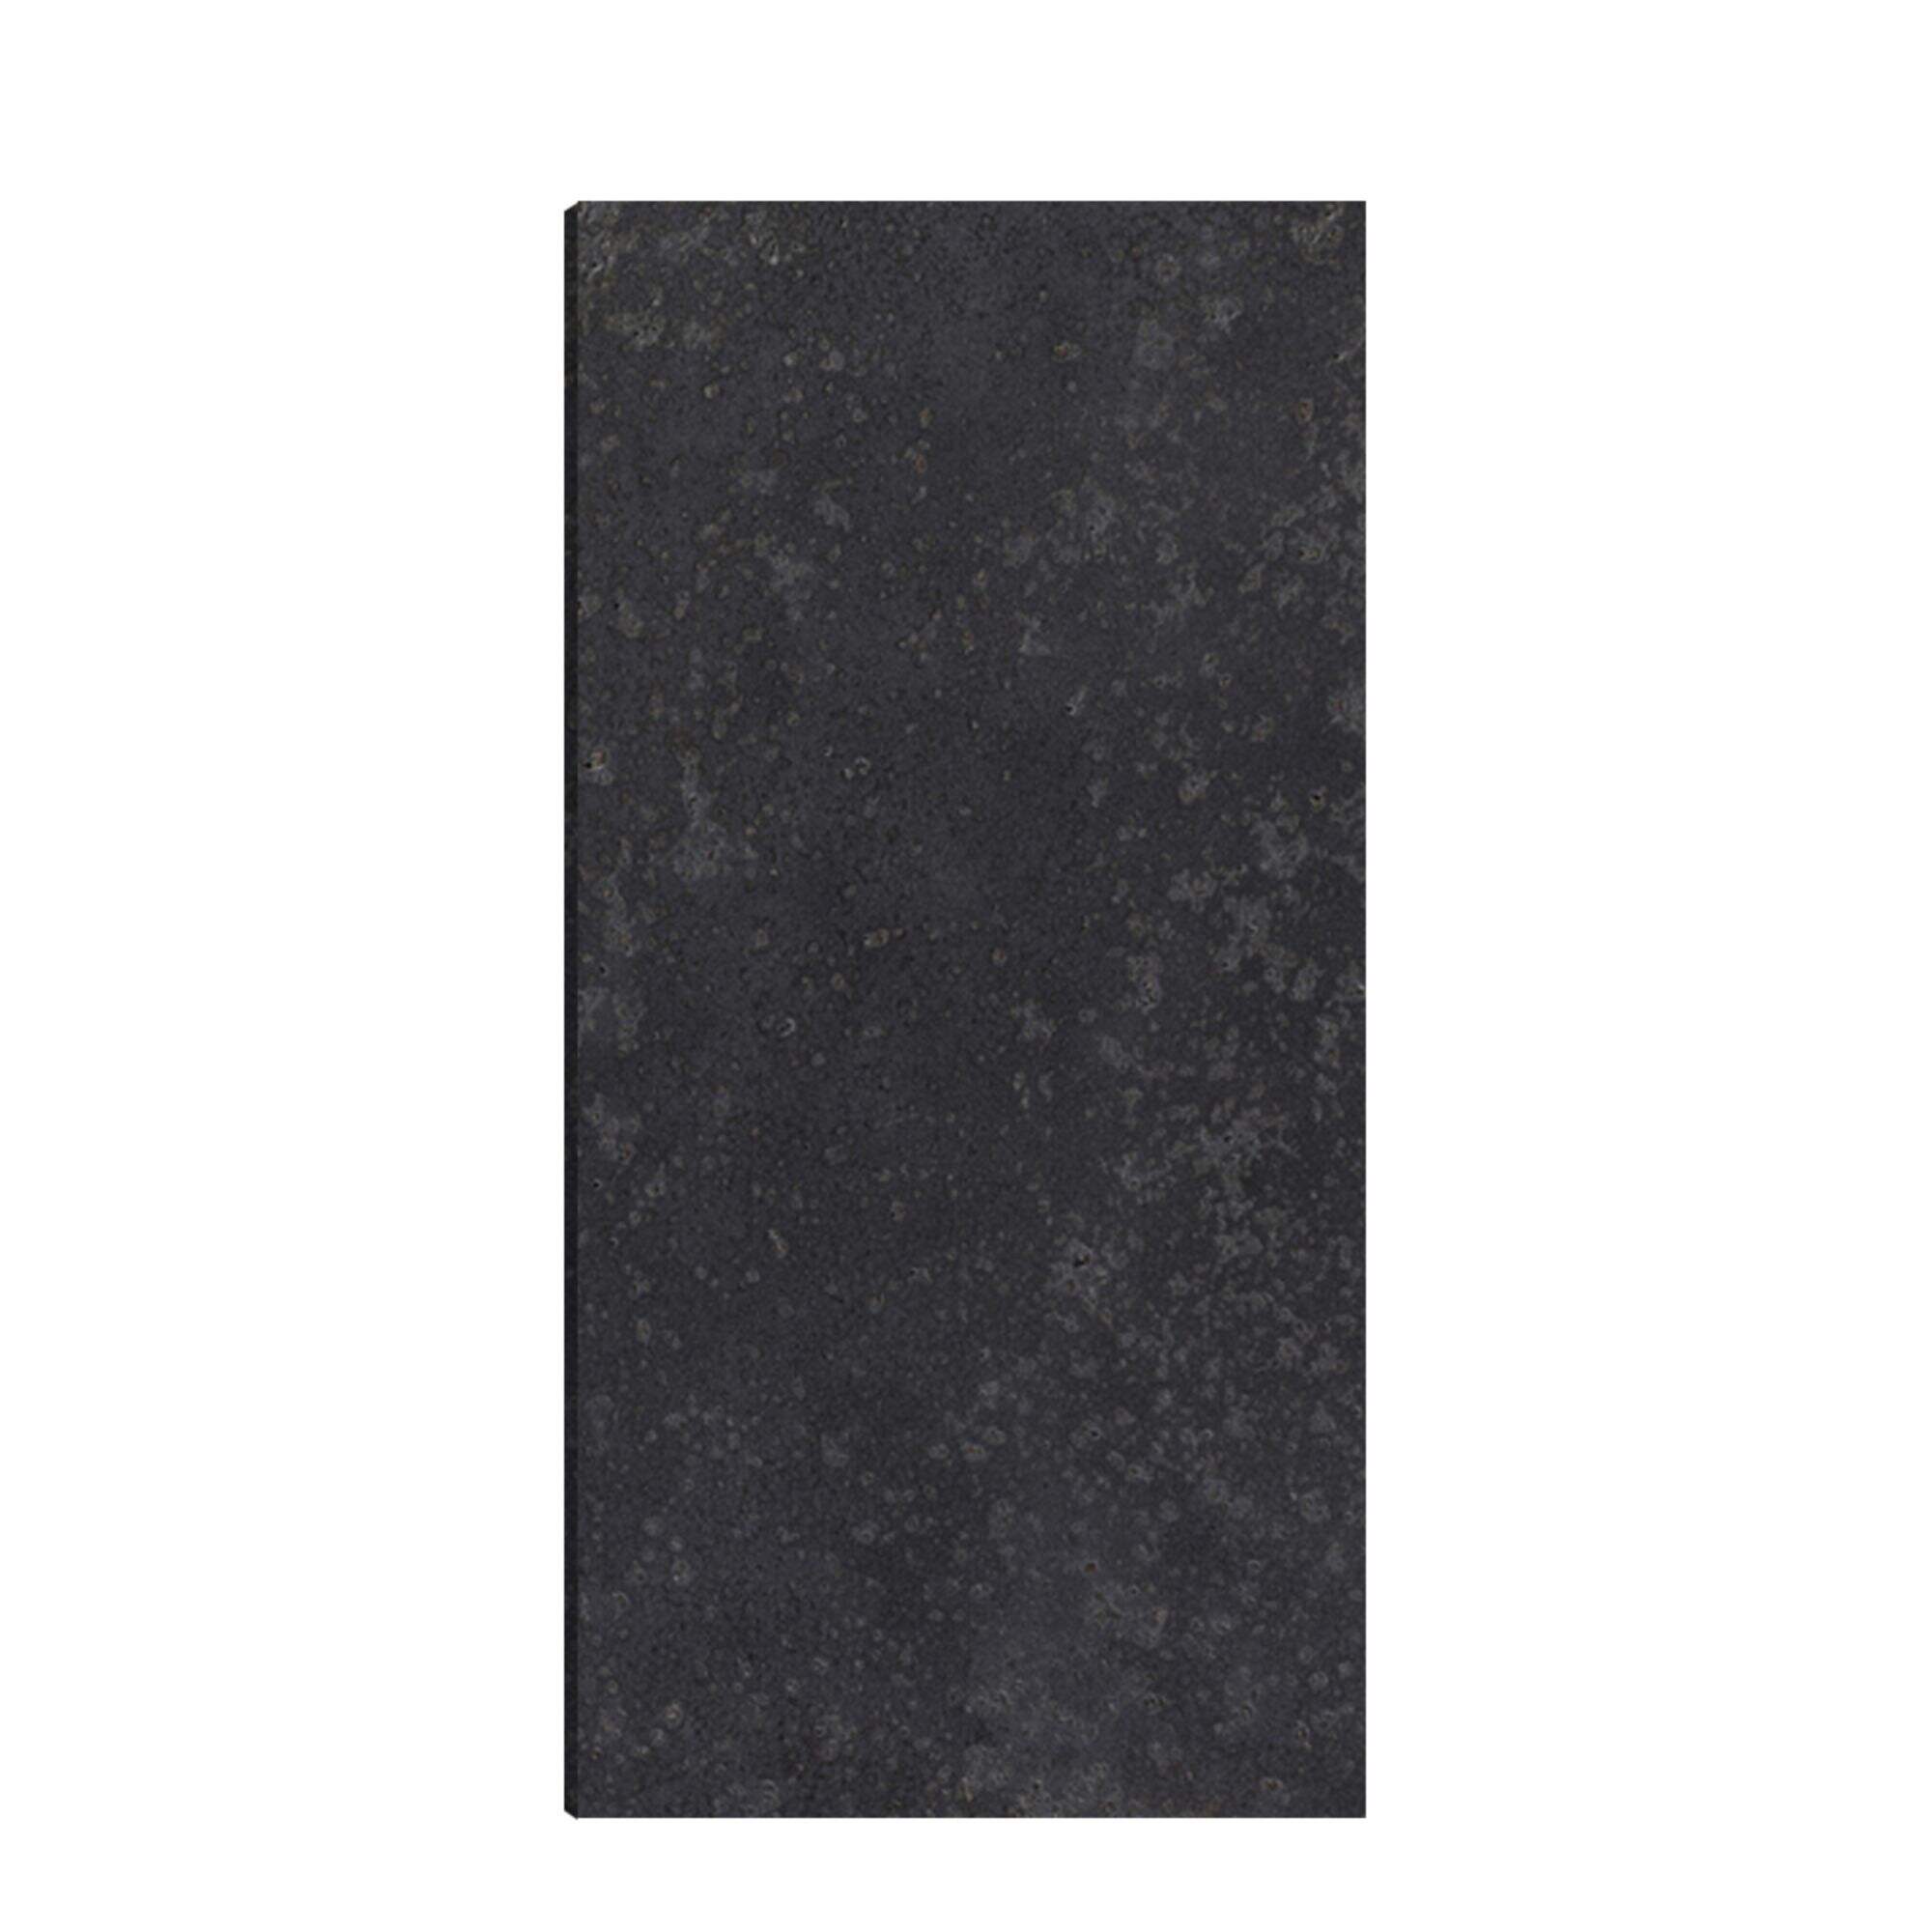 Imperial Black Gilt Sandstone Cement Board